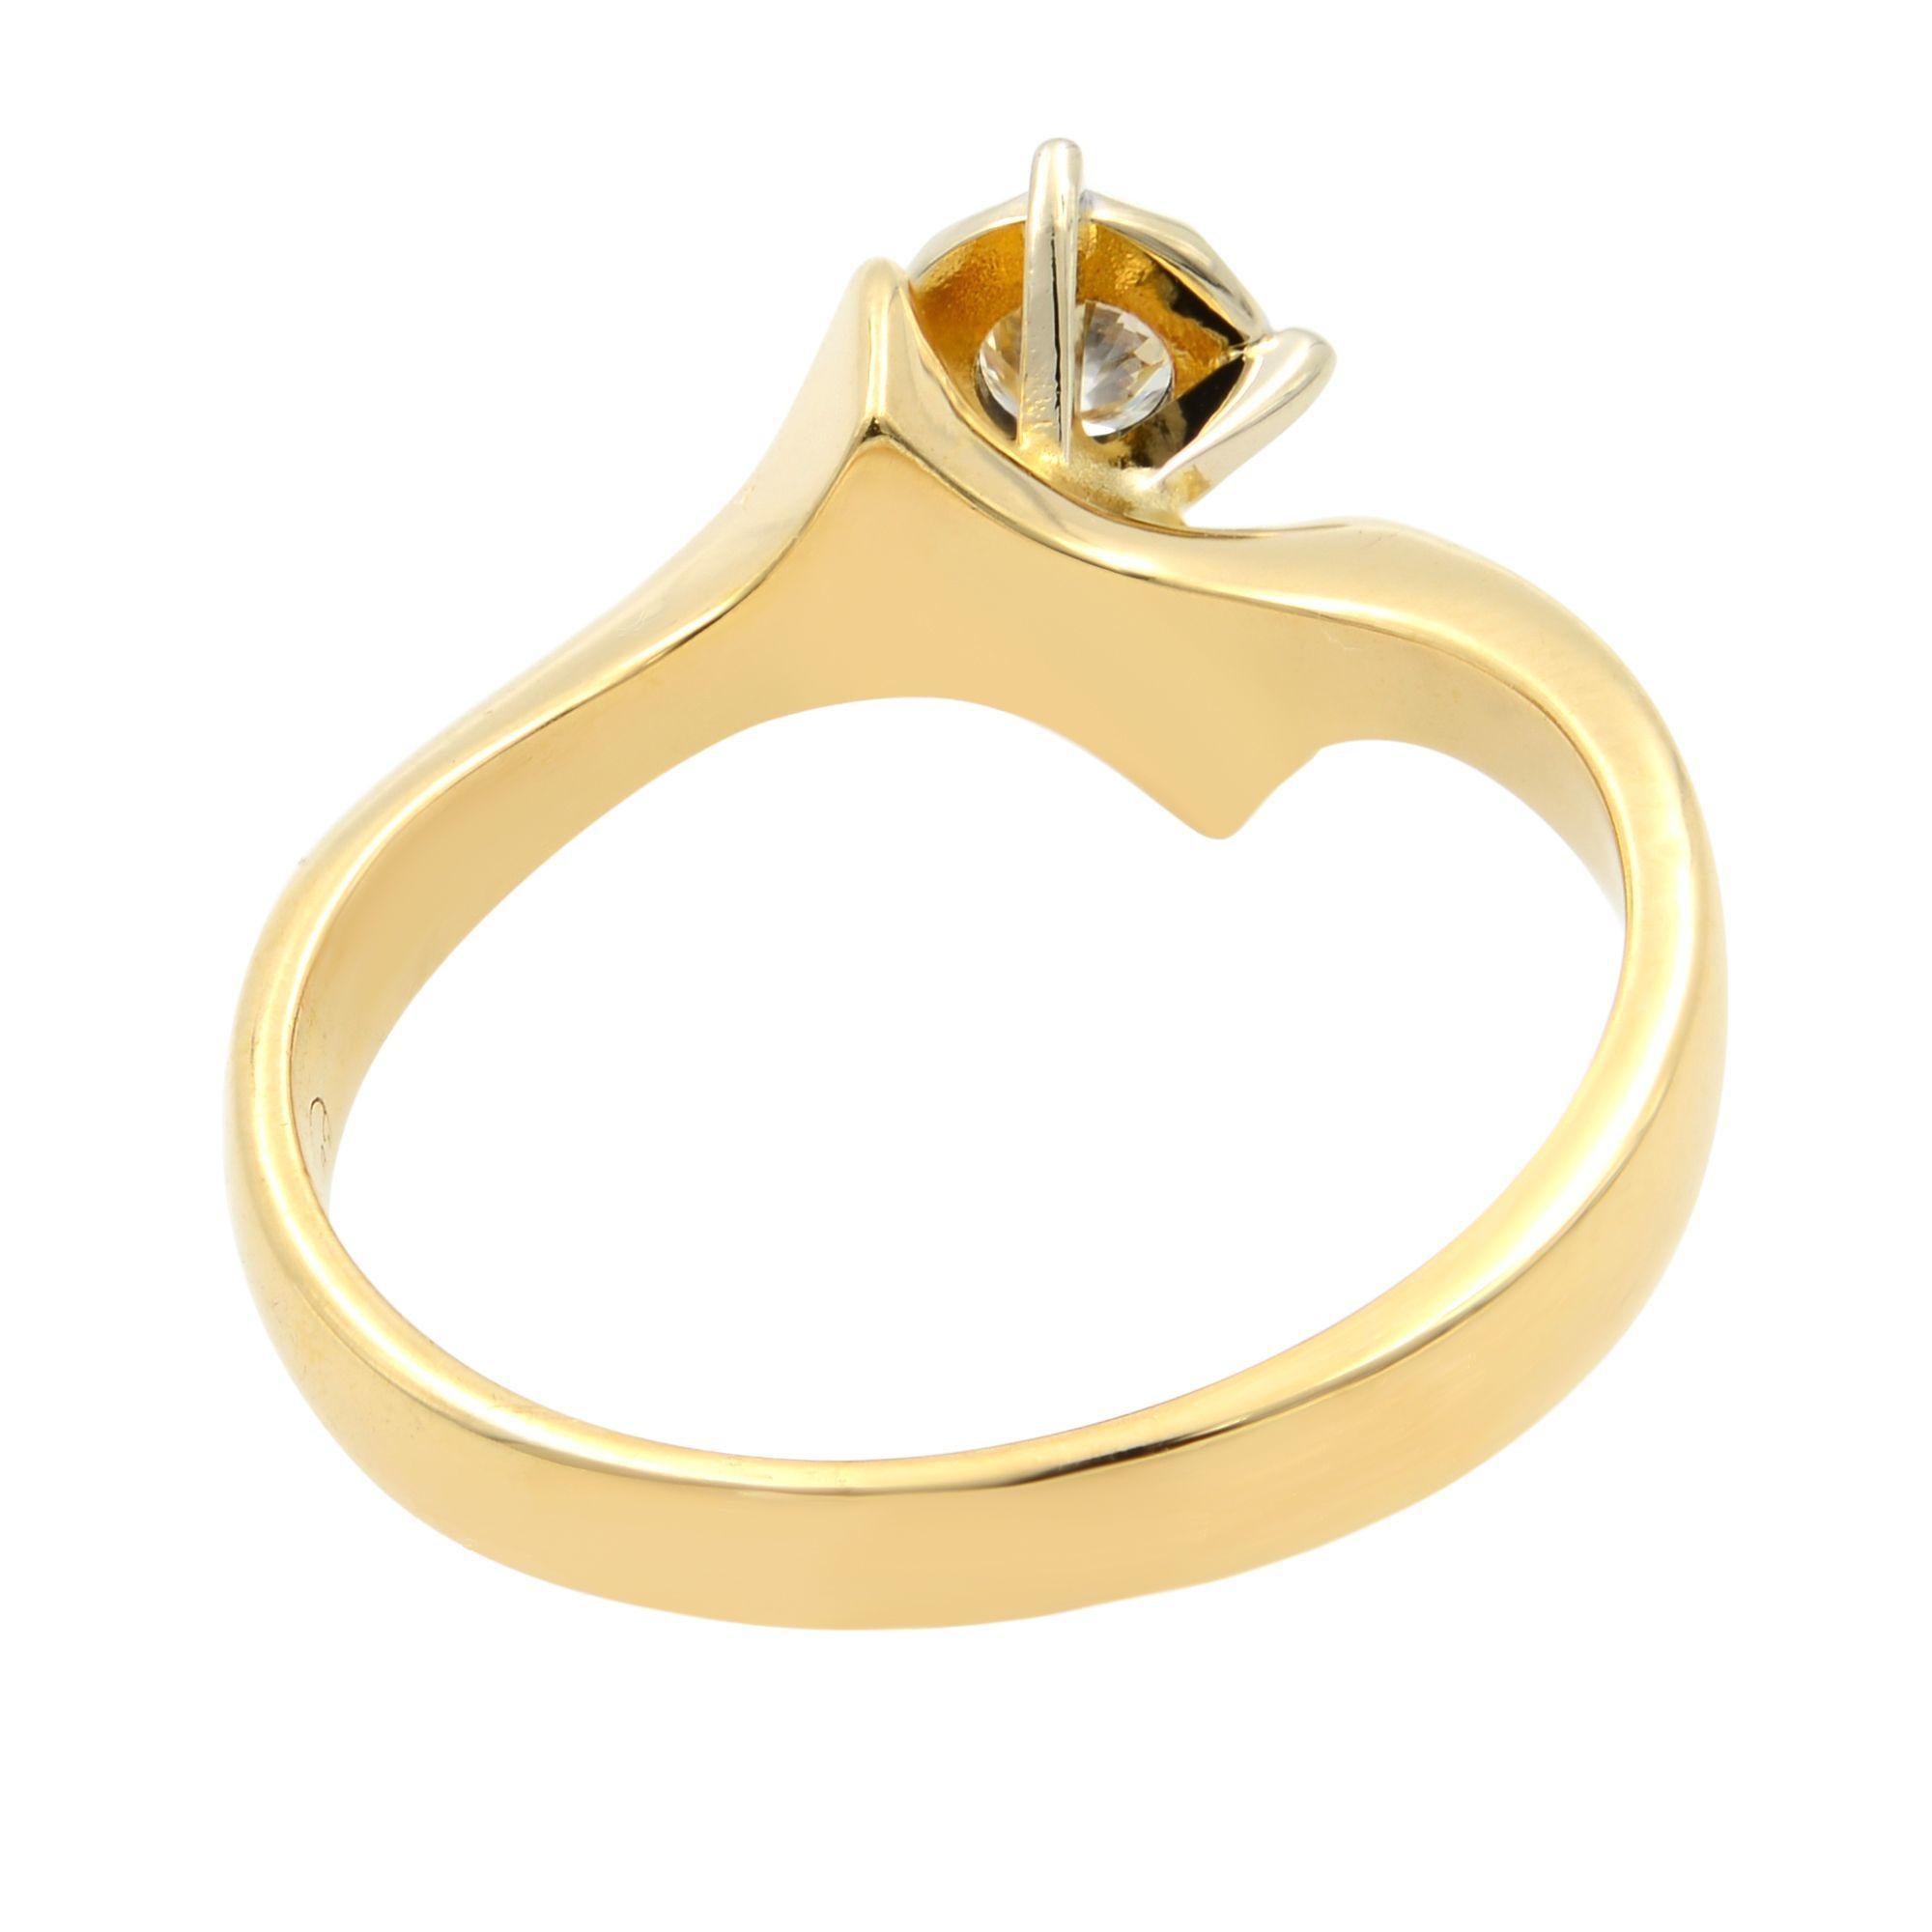 Modern Rachel Koen Round Cut Small Diamond Engagement Ring 14K Yellow Gold 0.15cttw For Sale